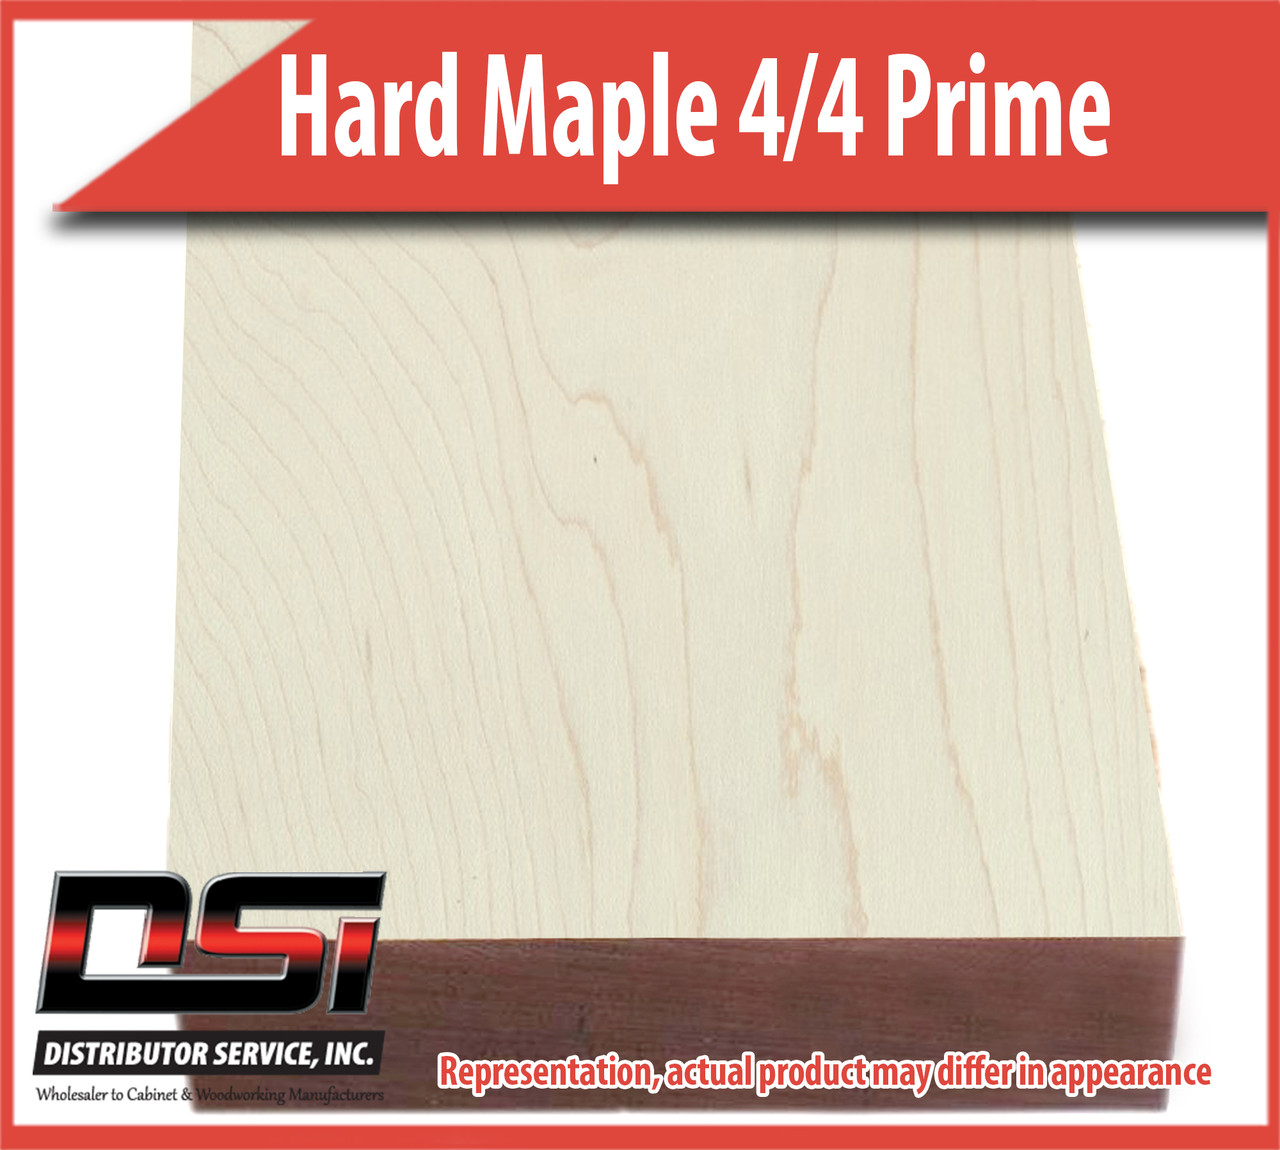 Domestic Hardwood Lumber Hard Maple 4/4 Prime #1&2 Wht15/16 11-12